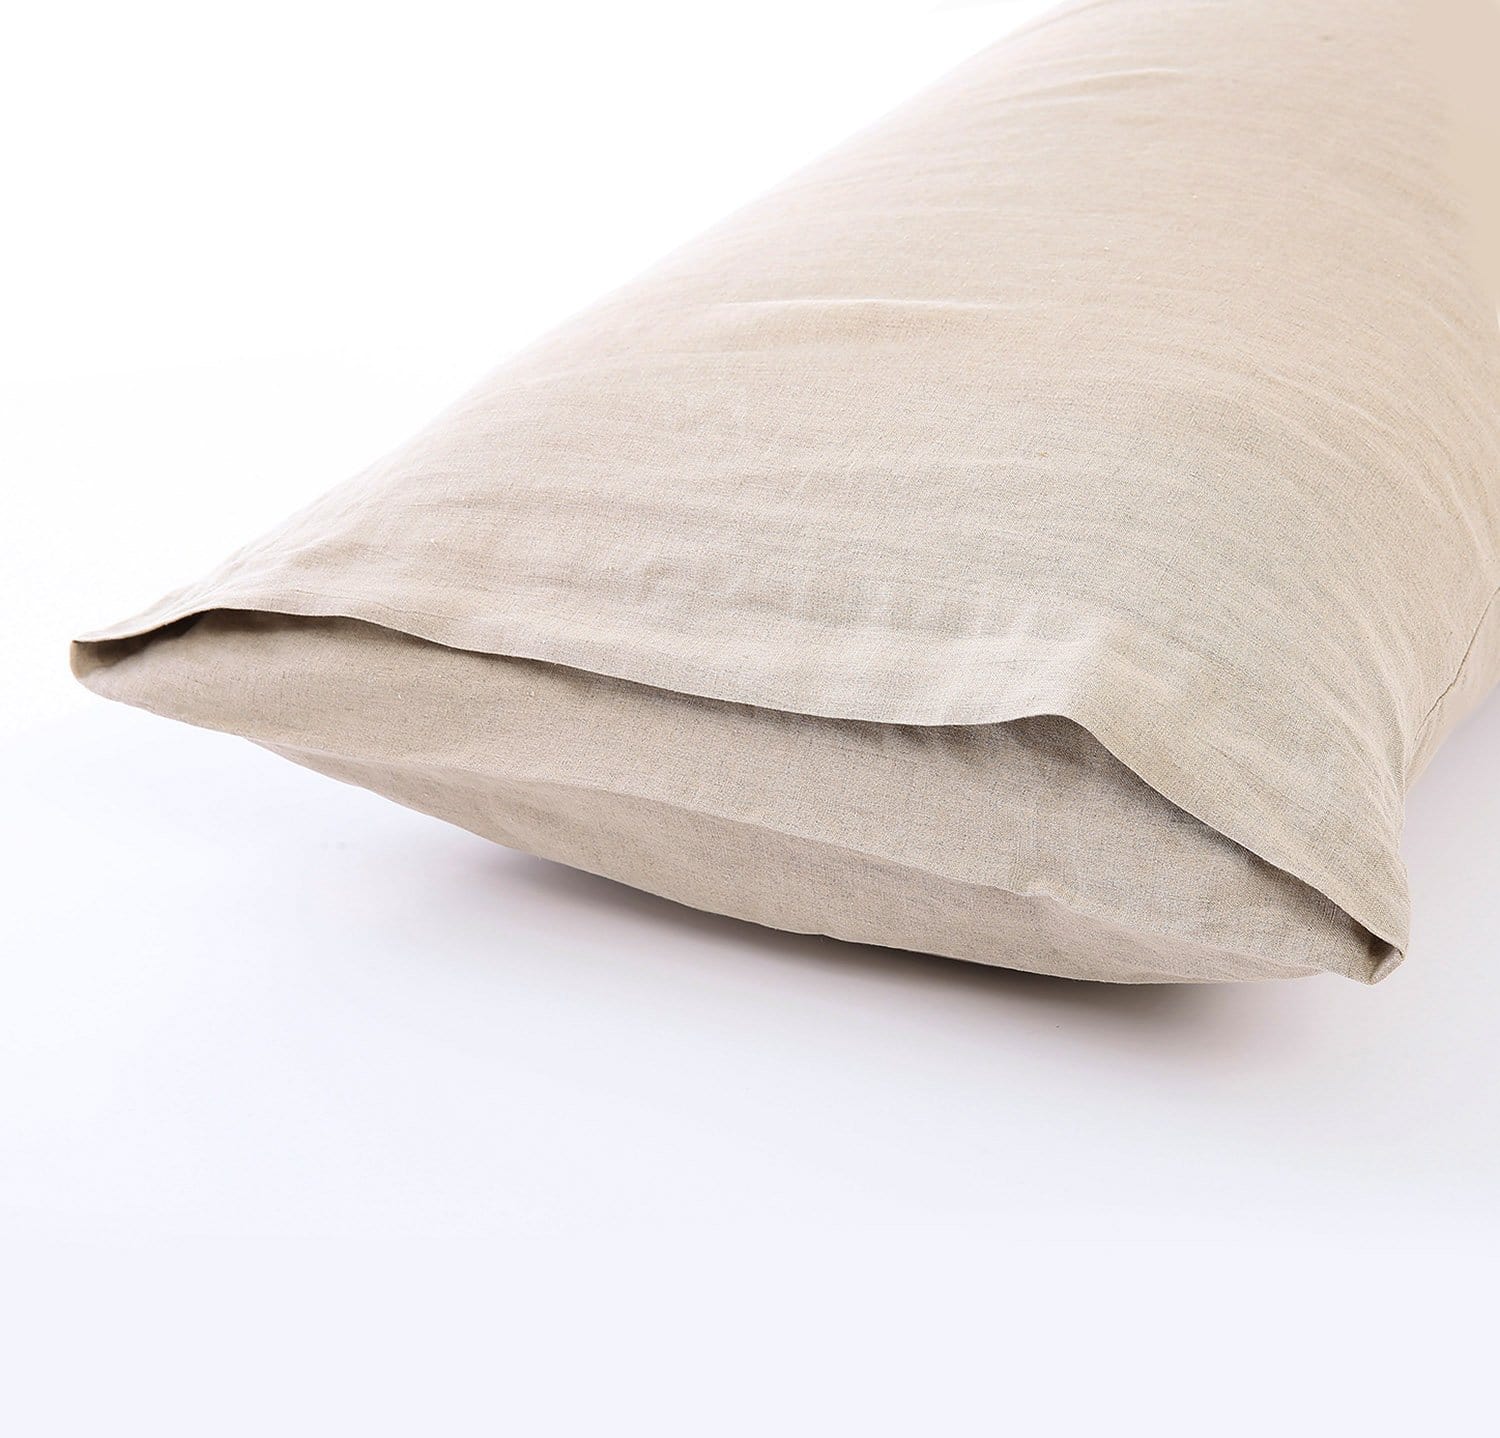 body pillow covers amazon